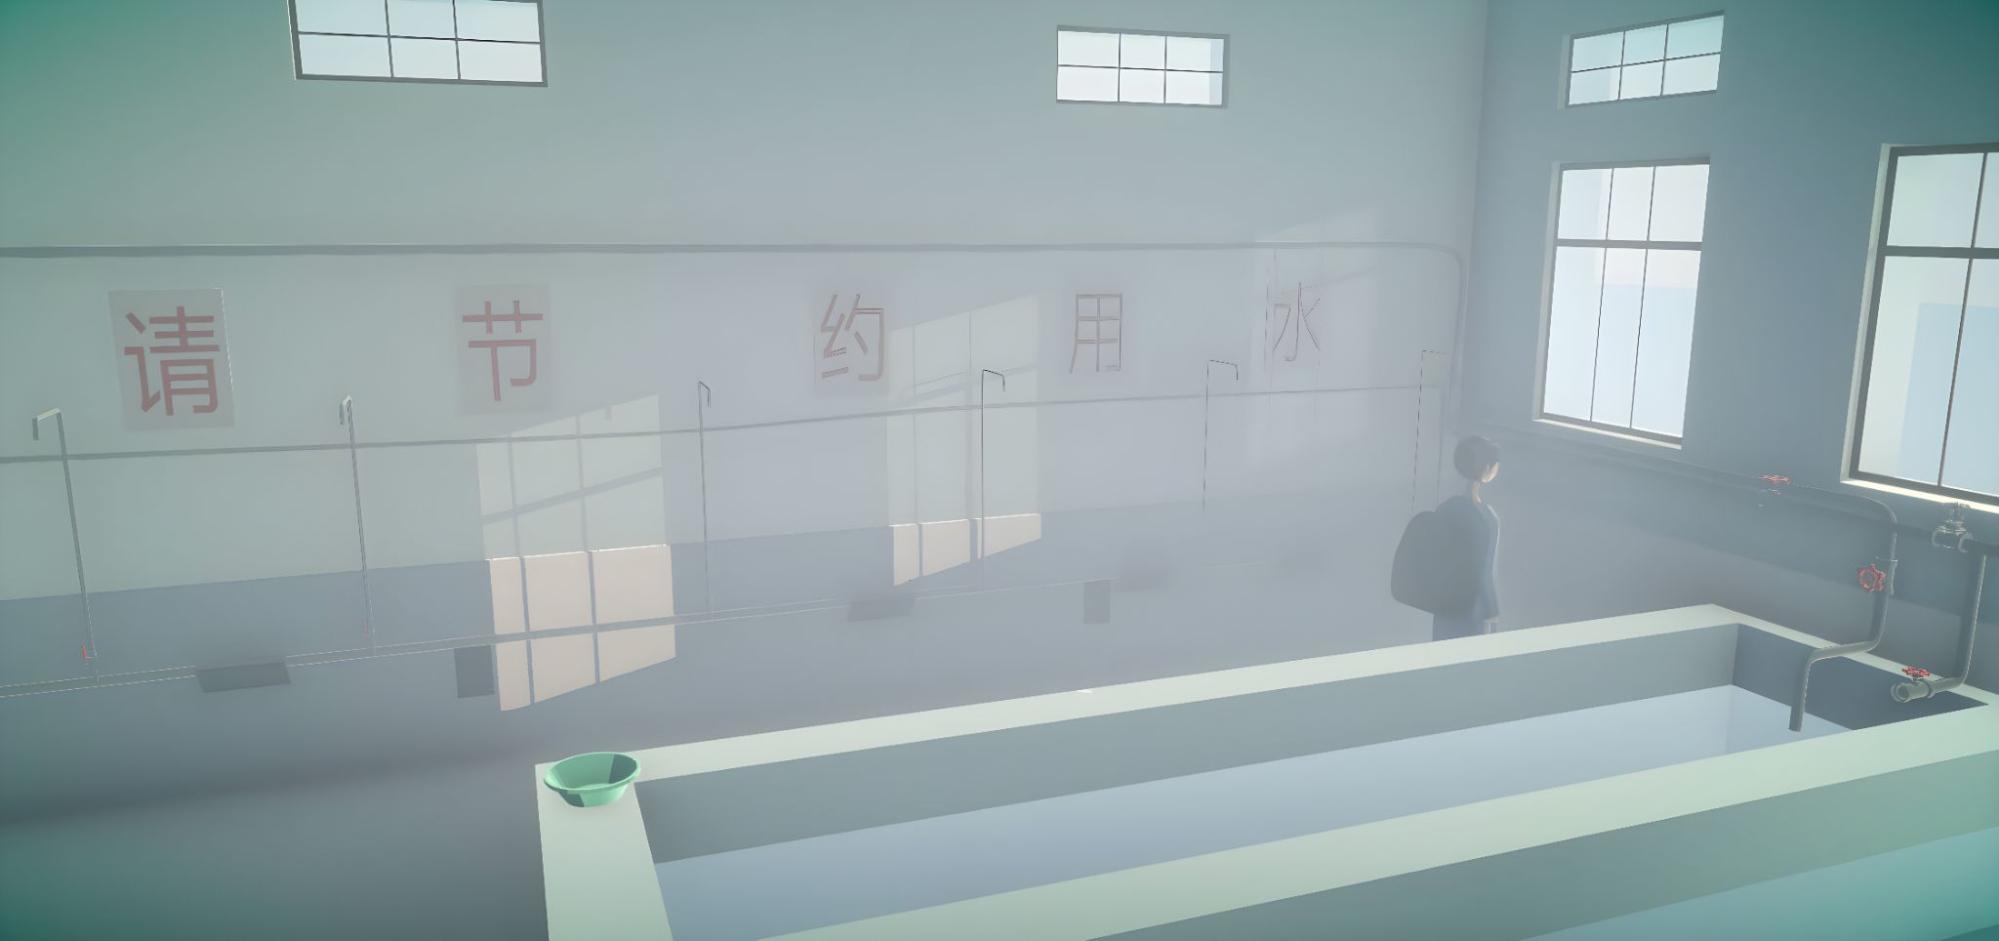 bathhouse interior 3d version